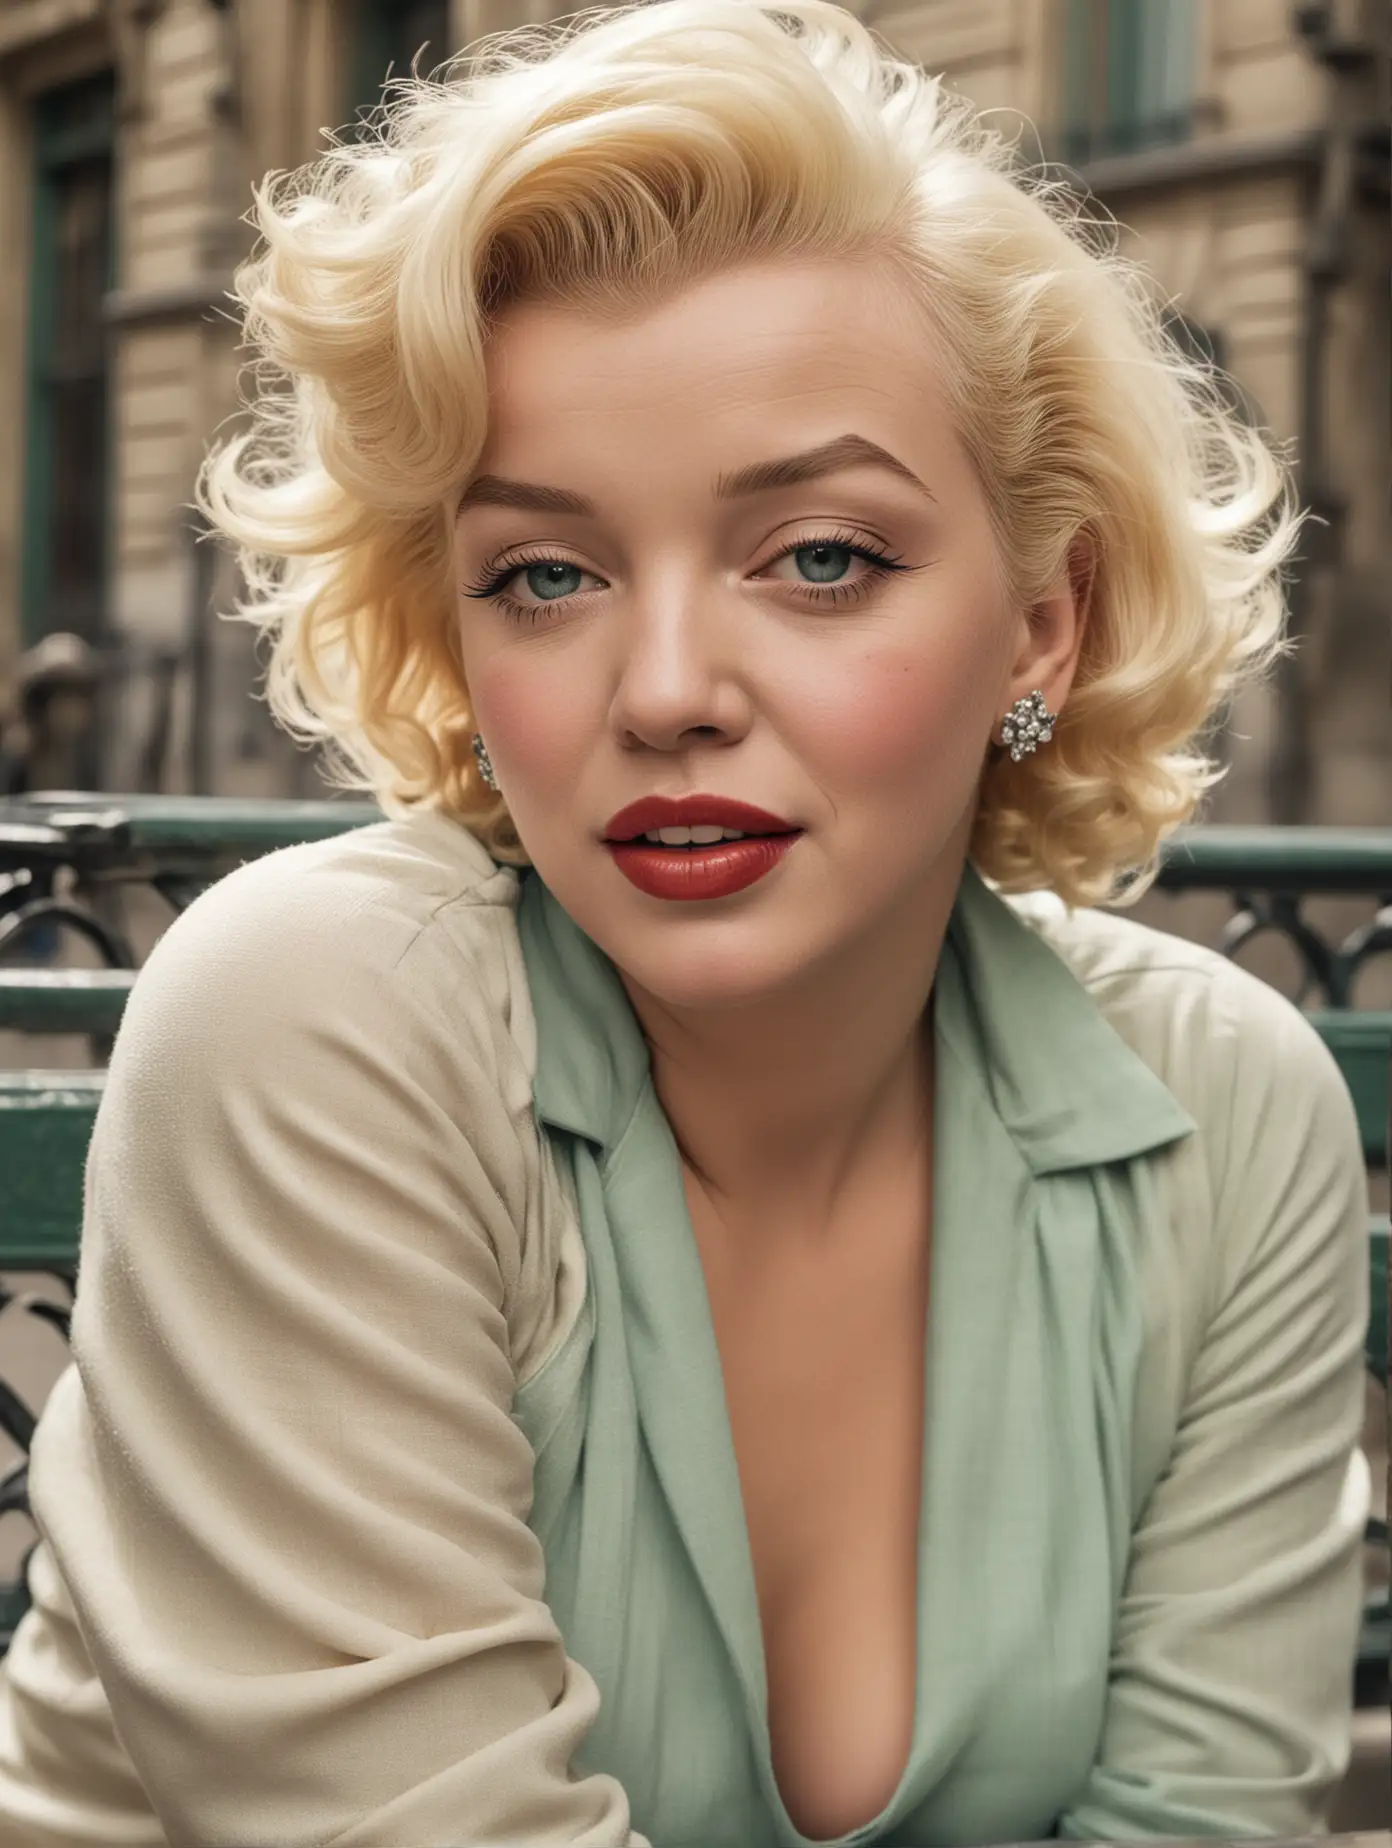 Marilyn-Monroe-Portrait-Sitting-on-Parisian-Bench-Vibrant-Colorization